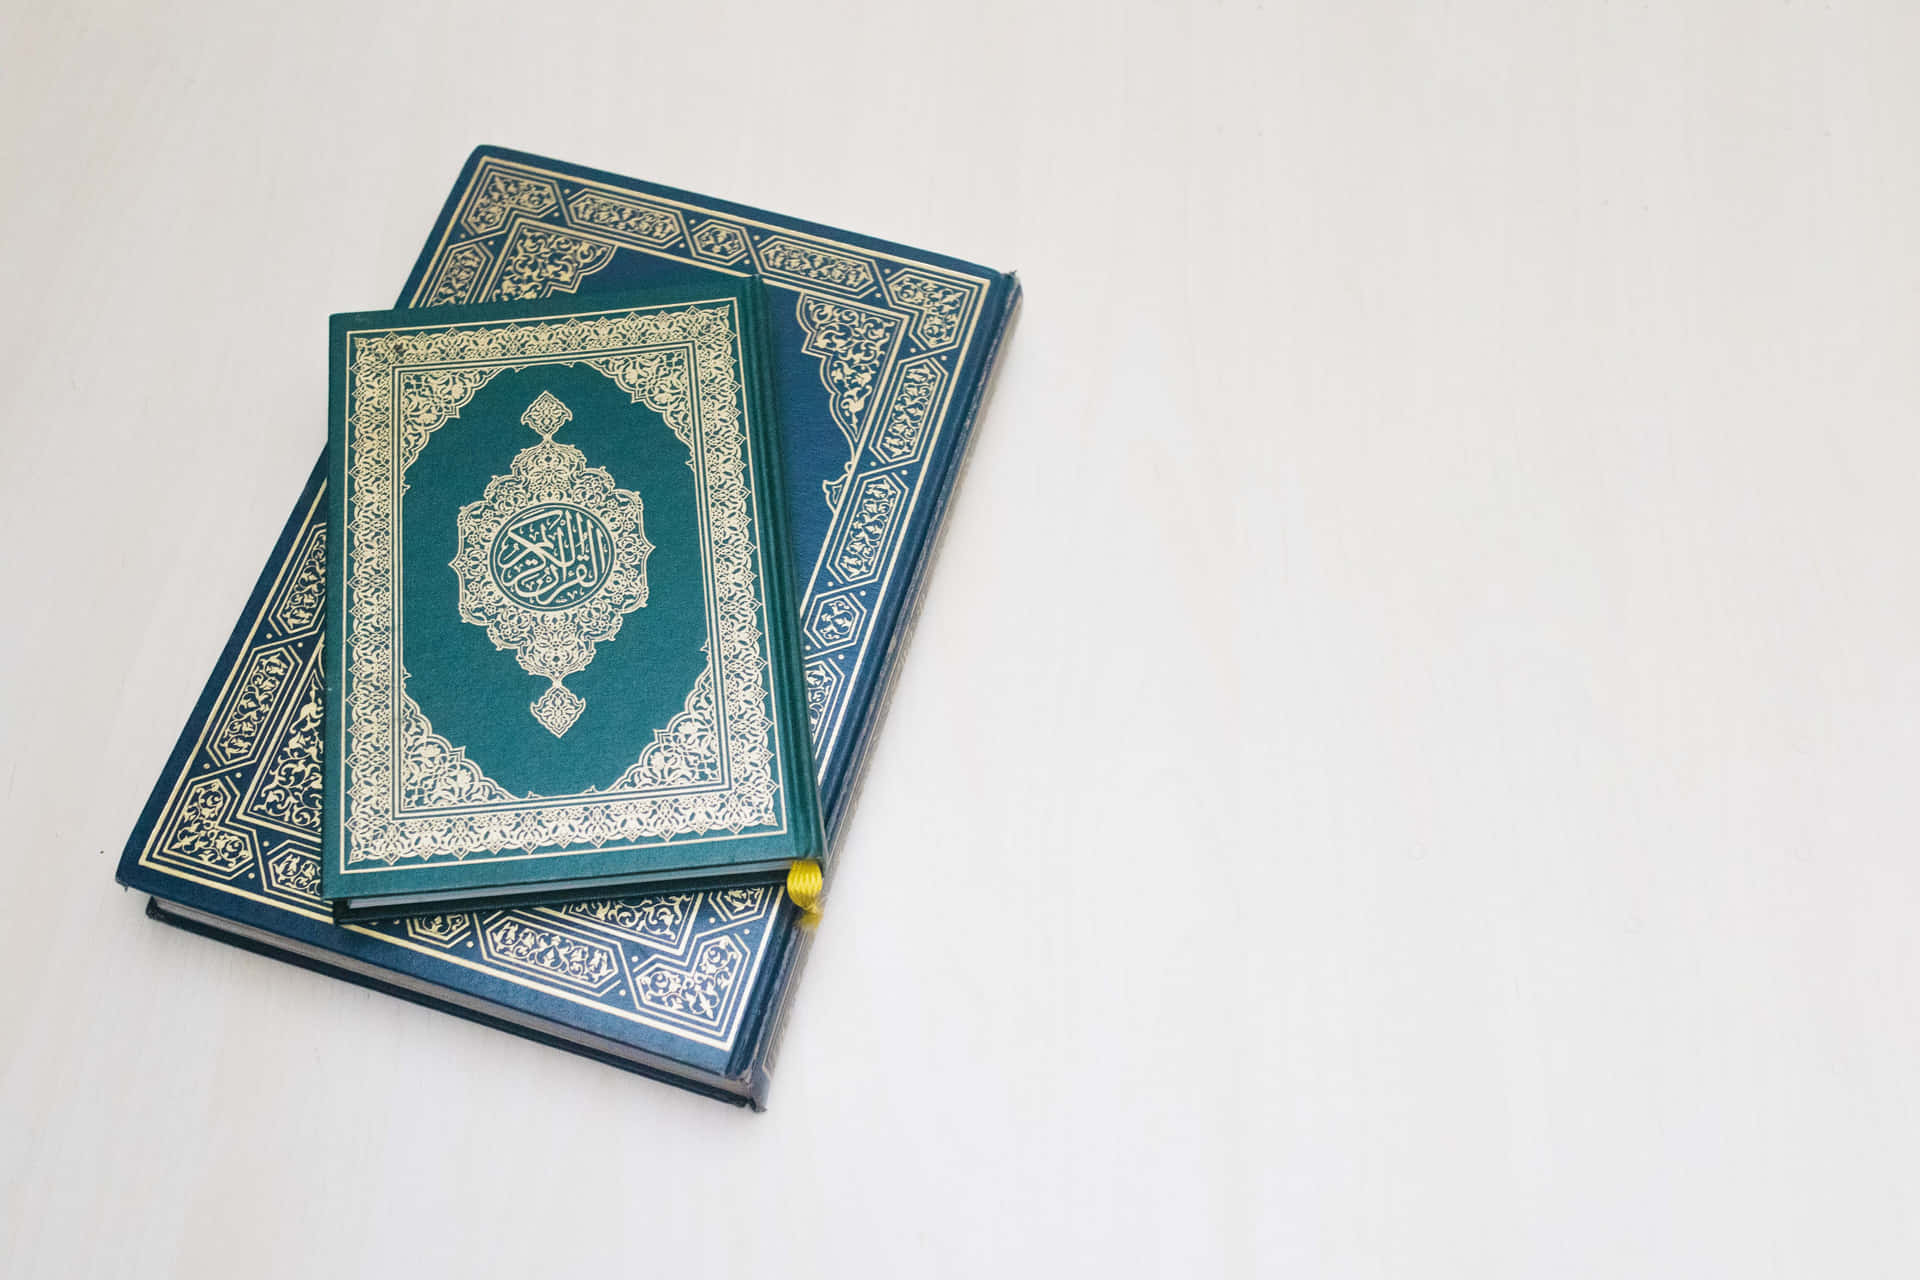 Fondosde Pantalla De Libros Del Sagrado Corán, Con Temática Islámica.